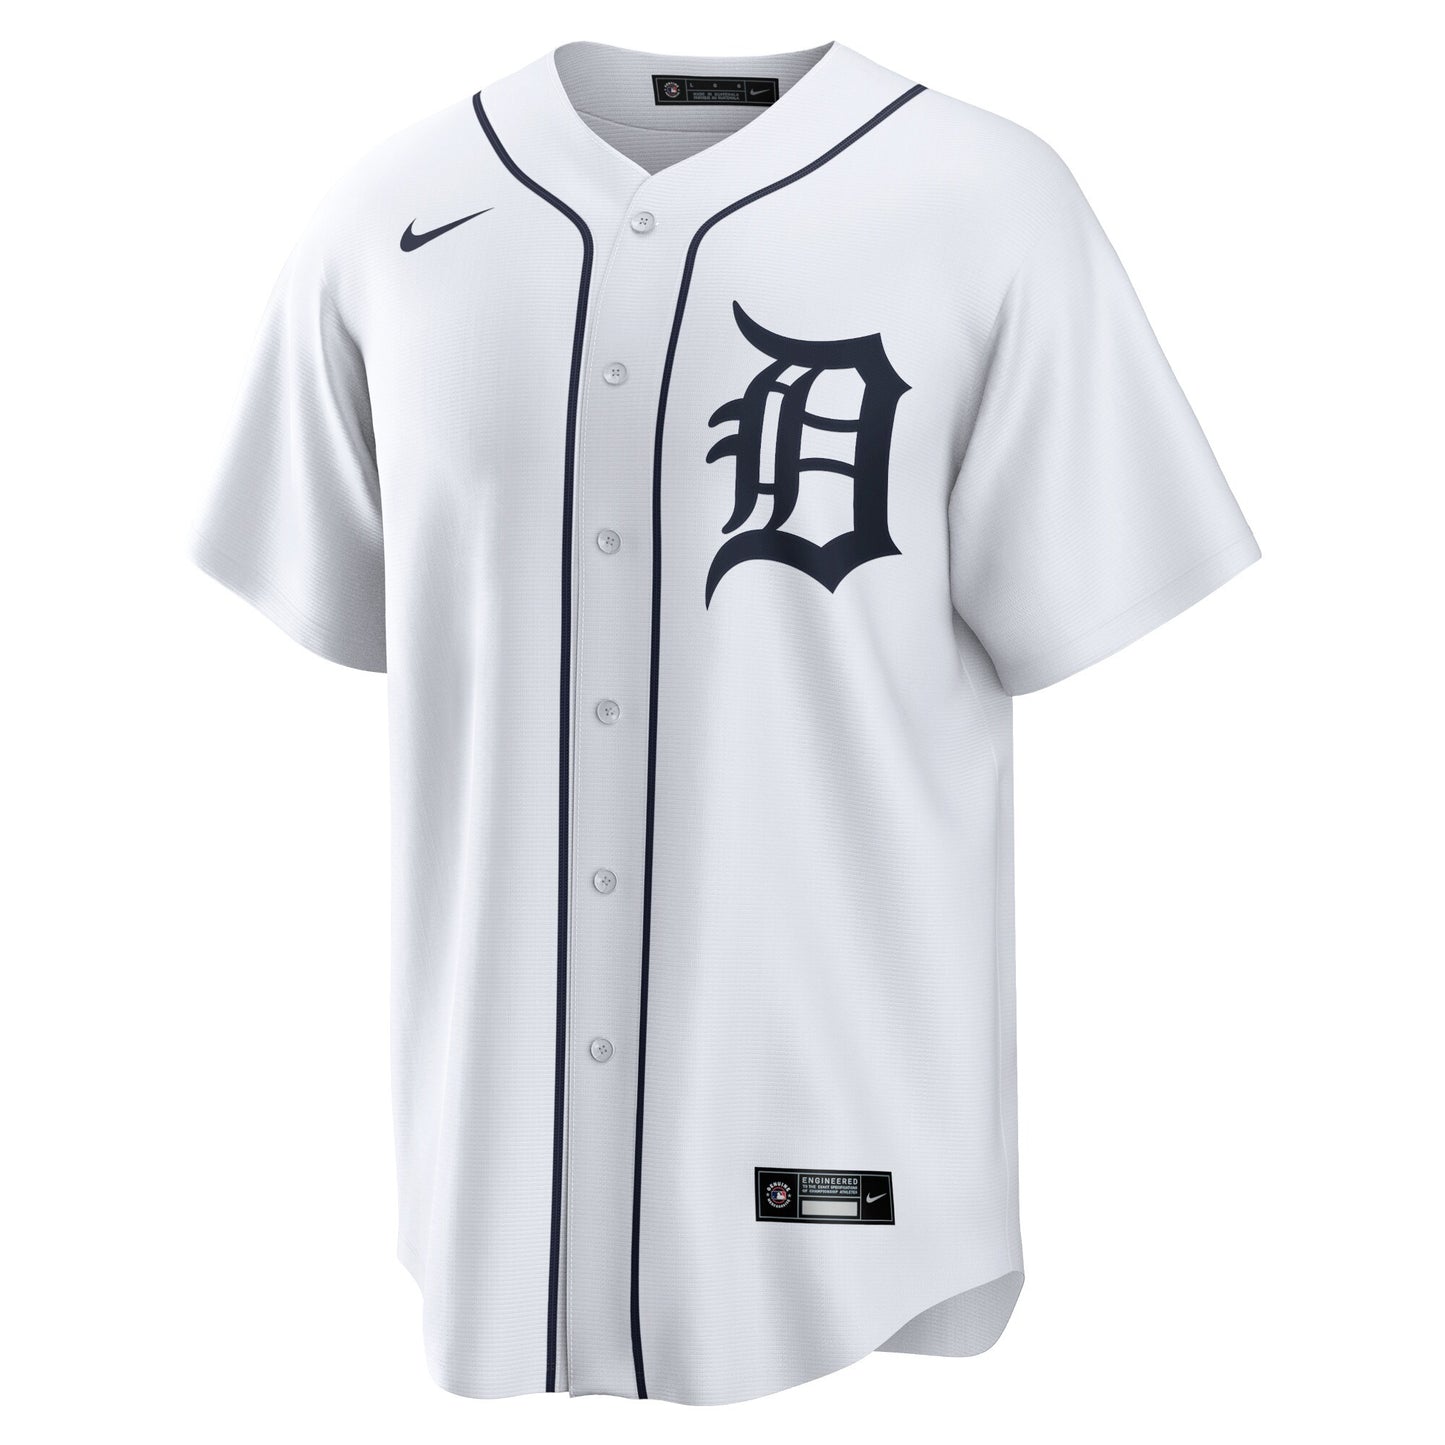 Men's Detroit Tigers Nike White Home Blank Replica Jersey